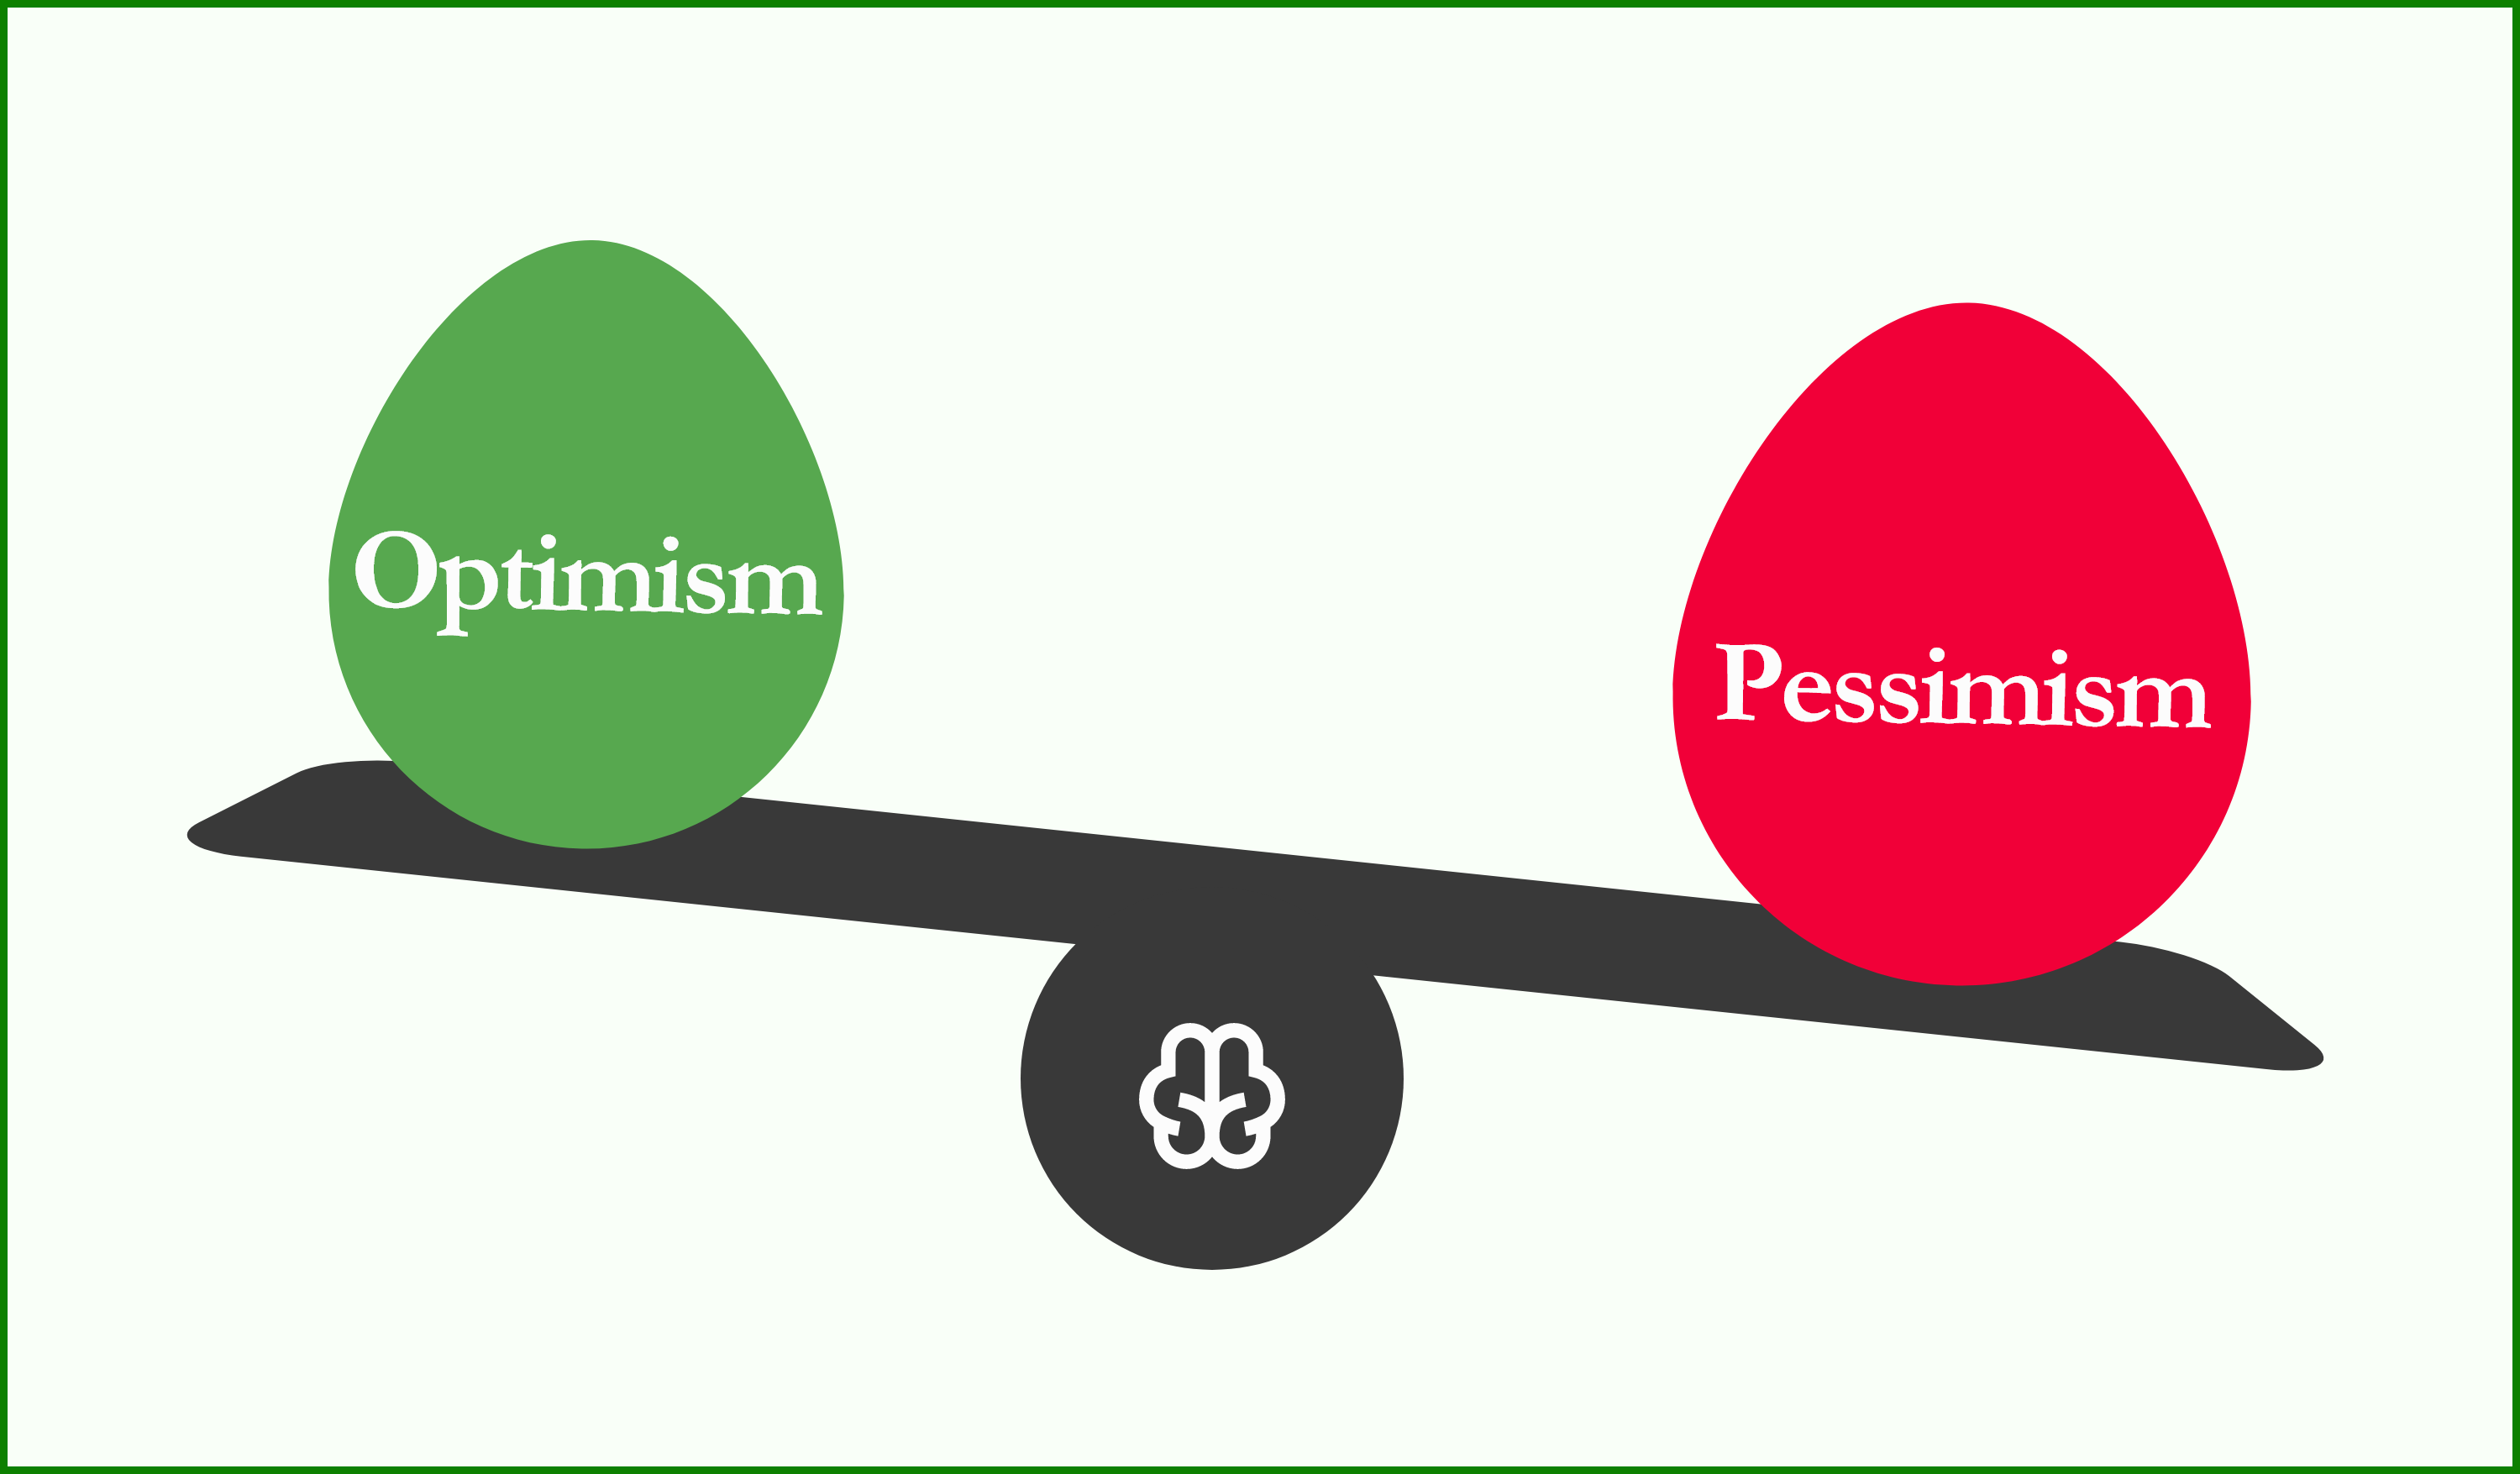 a balance where optimism weigh less than pessismism